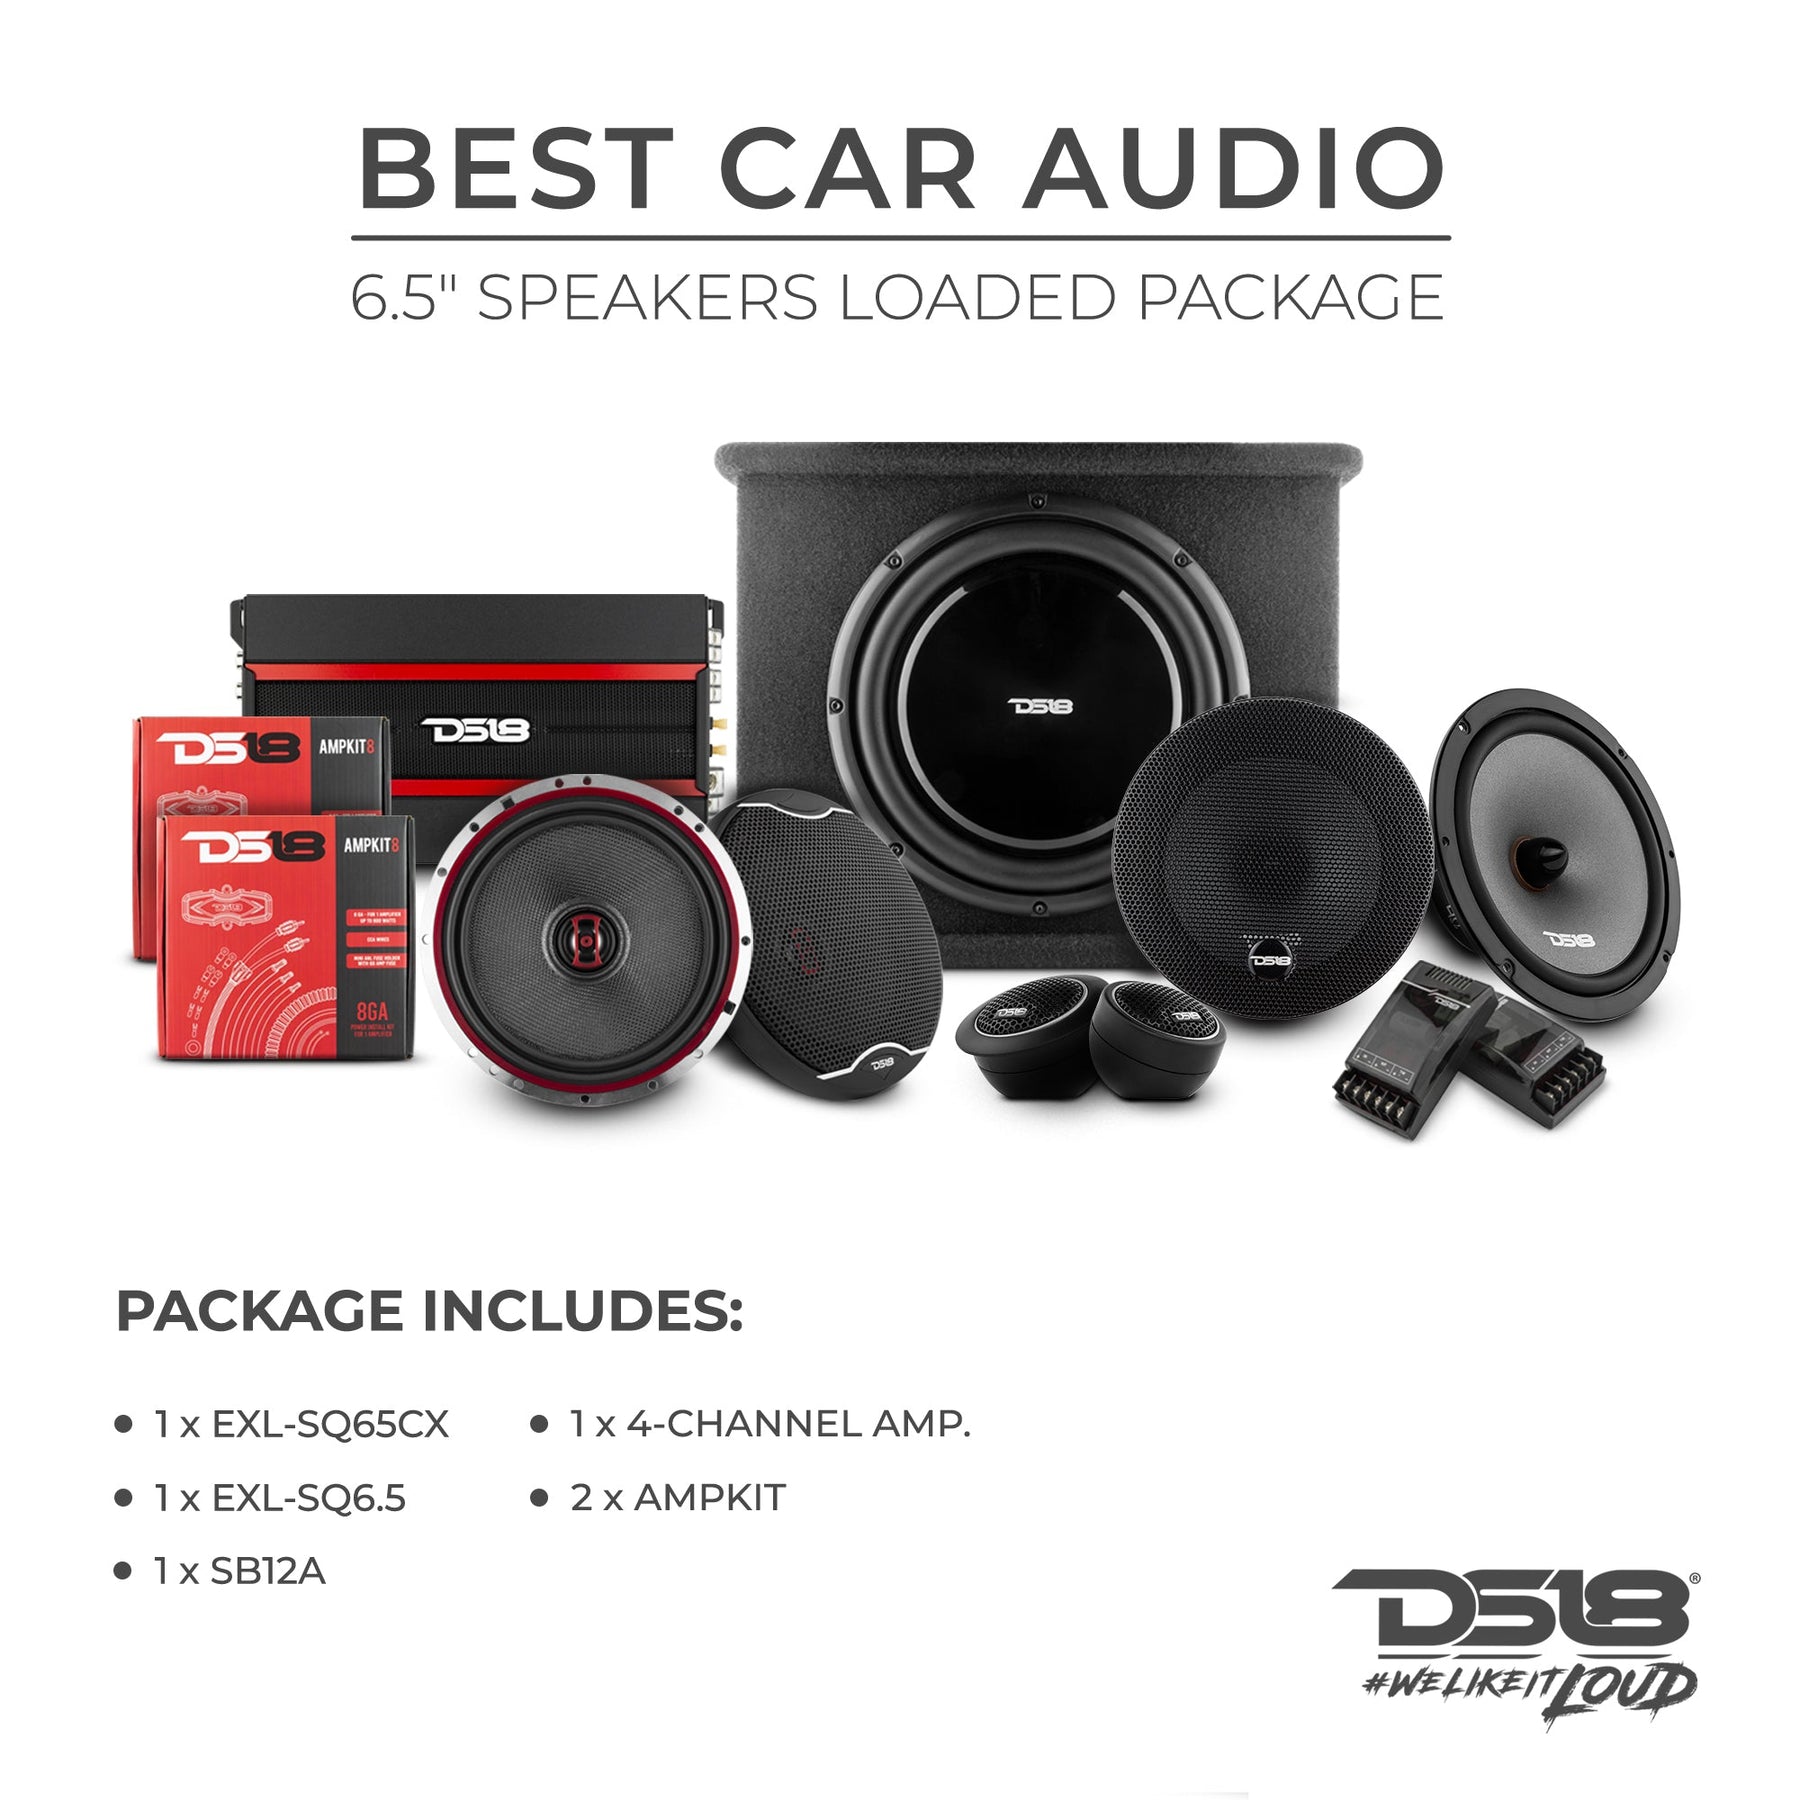 DS18 Best Car Audio Package